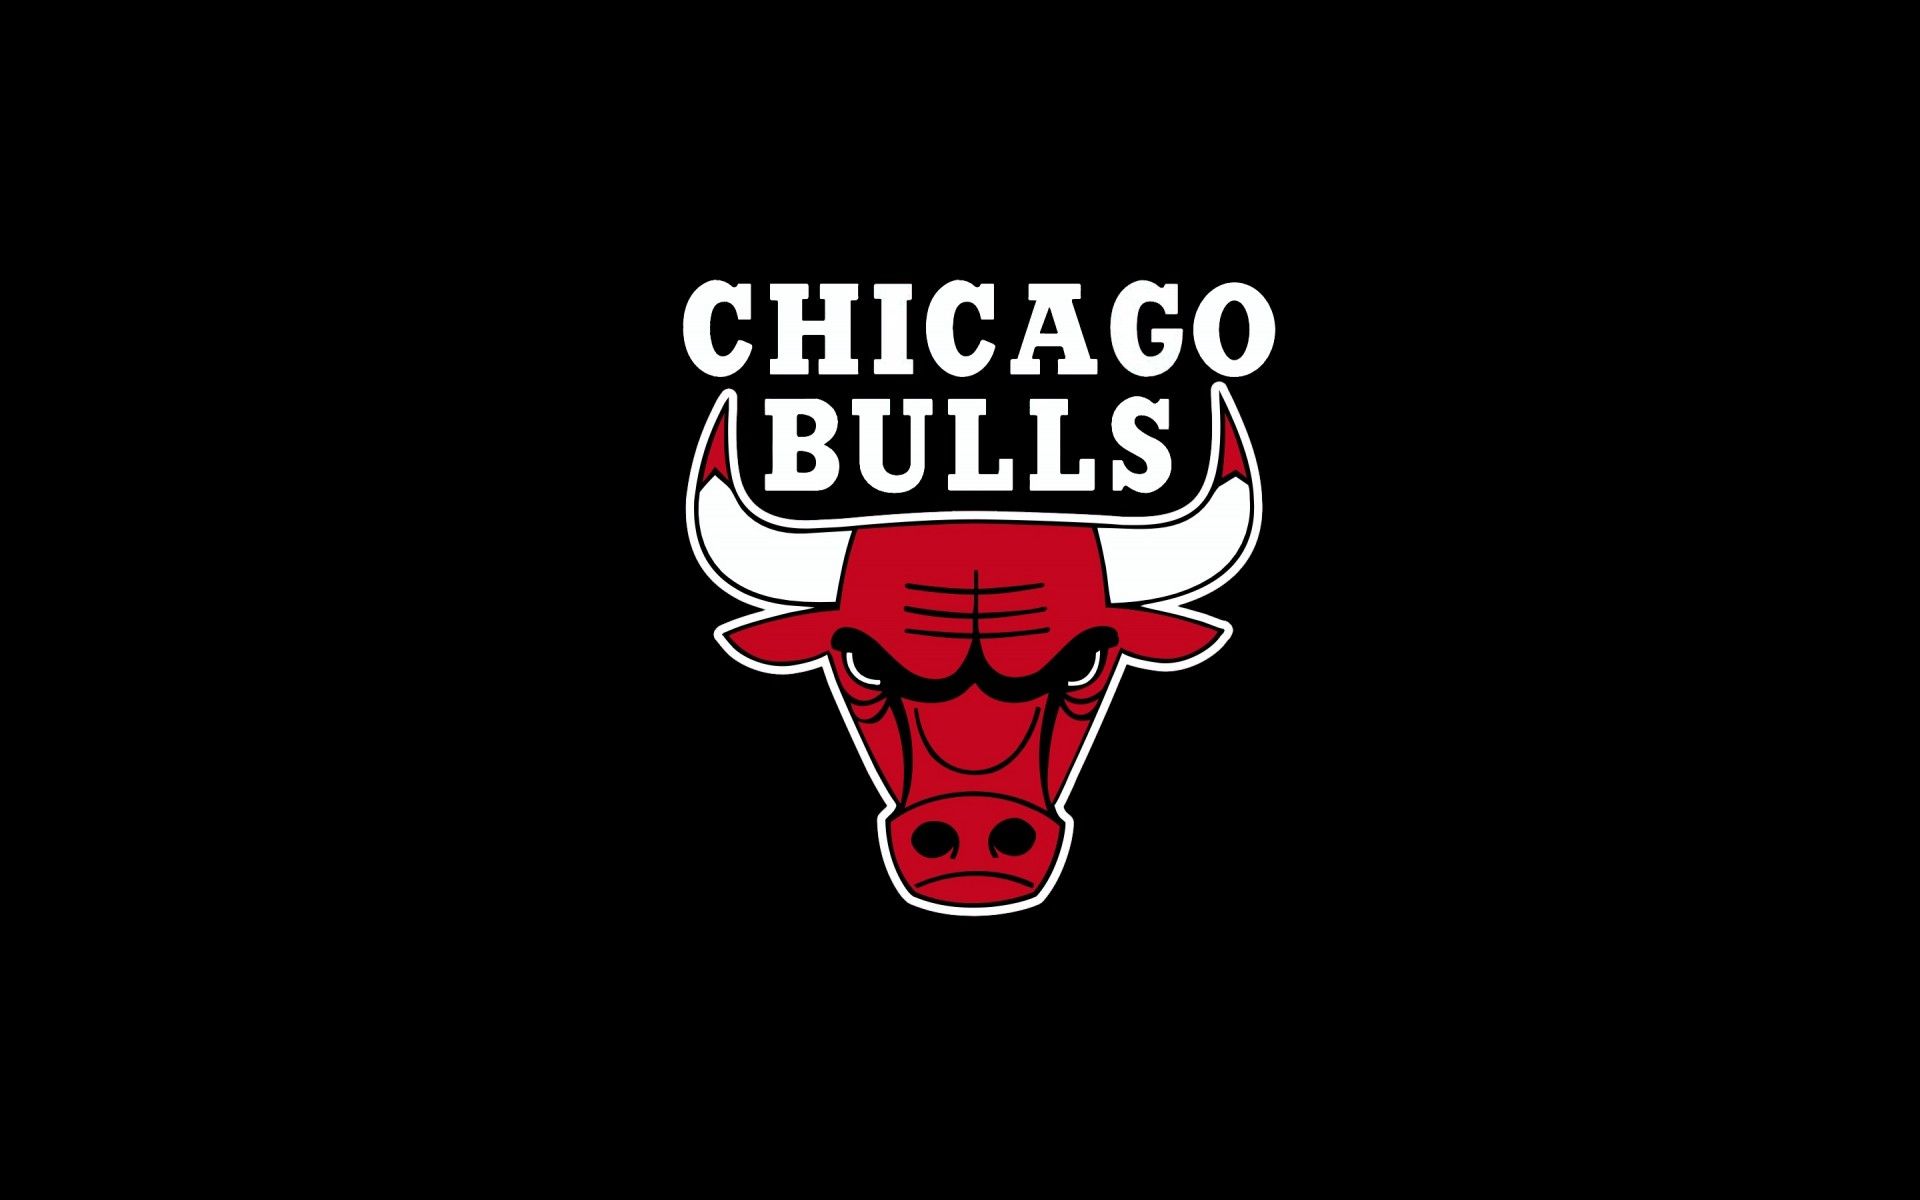 Chicago Bulls, nba, logo, sports, black background Image Wallpaper